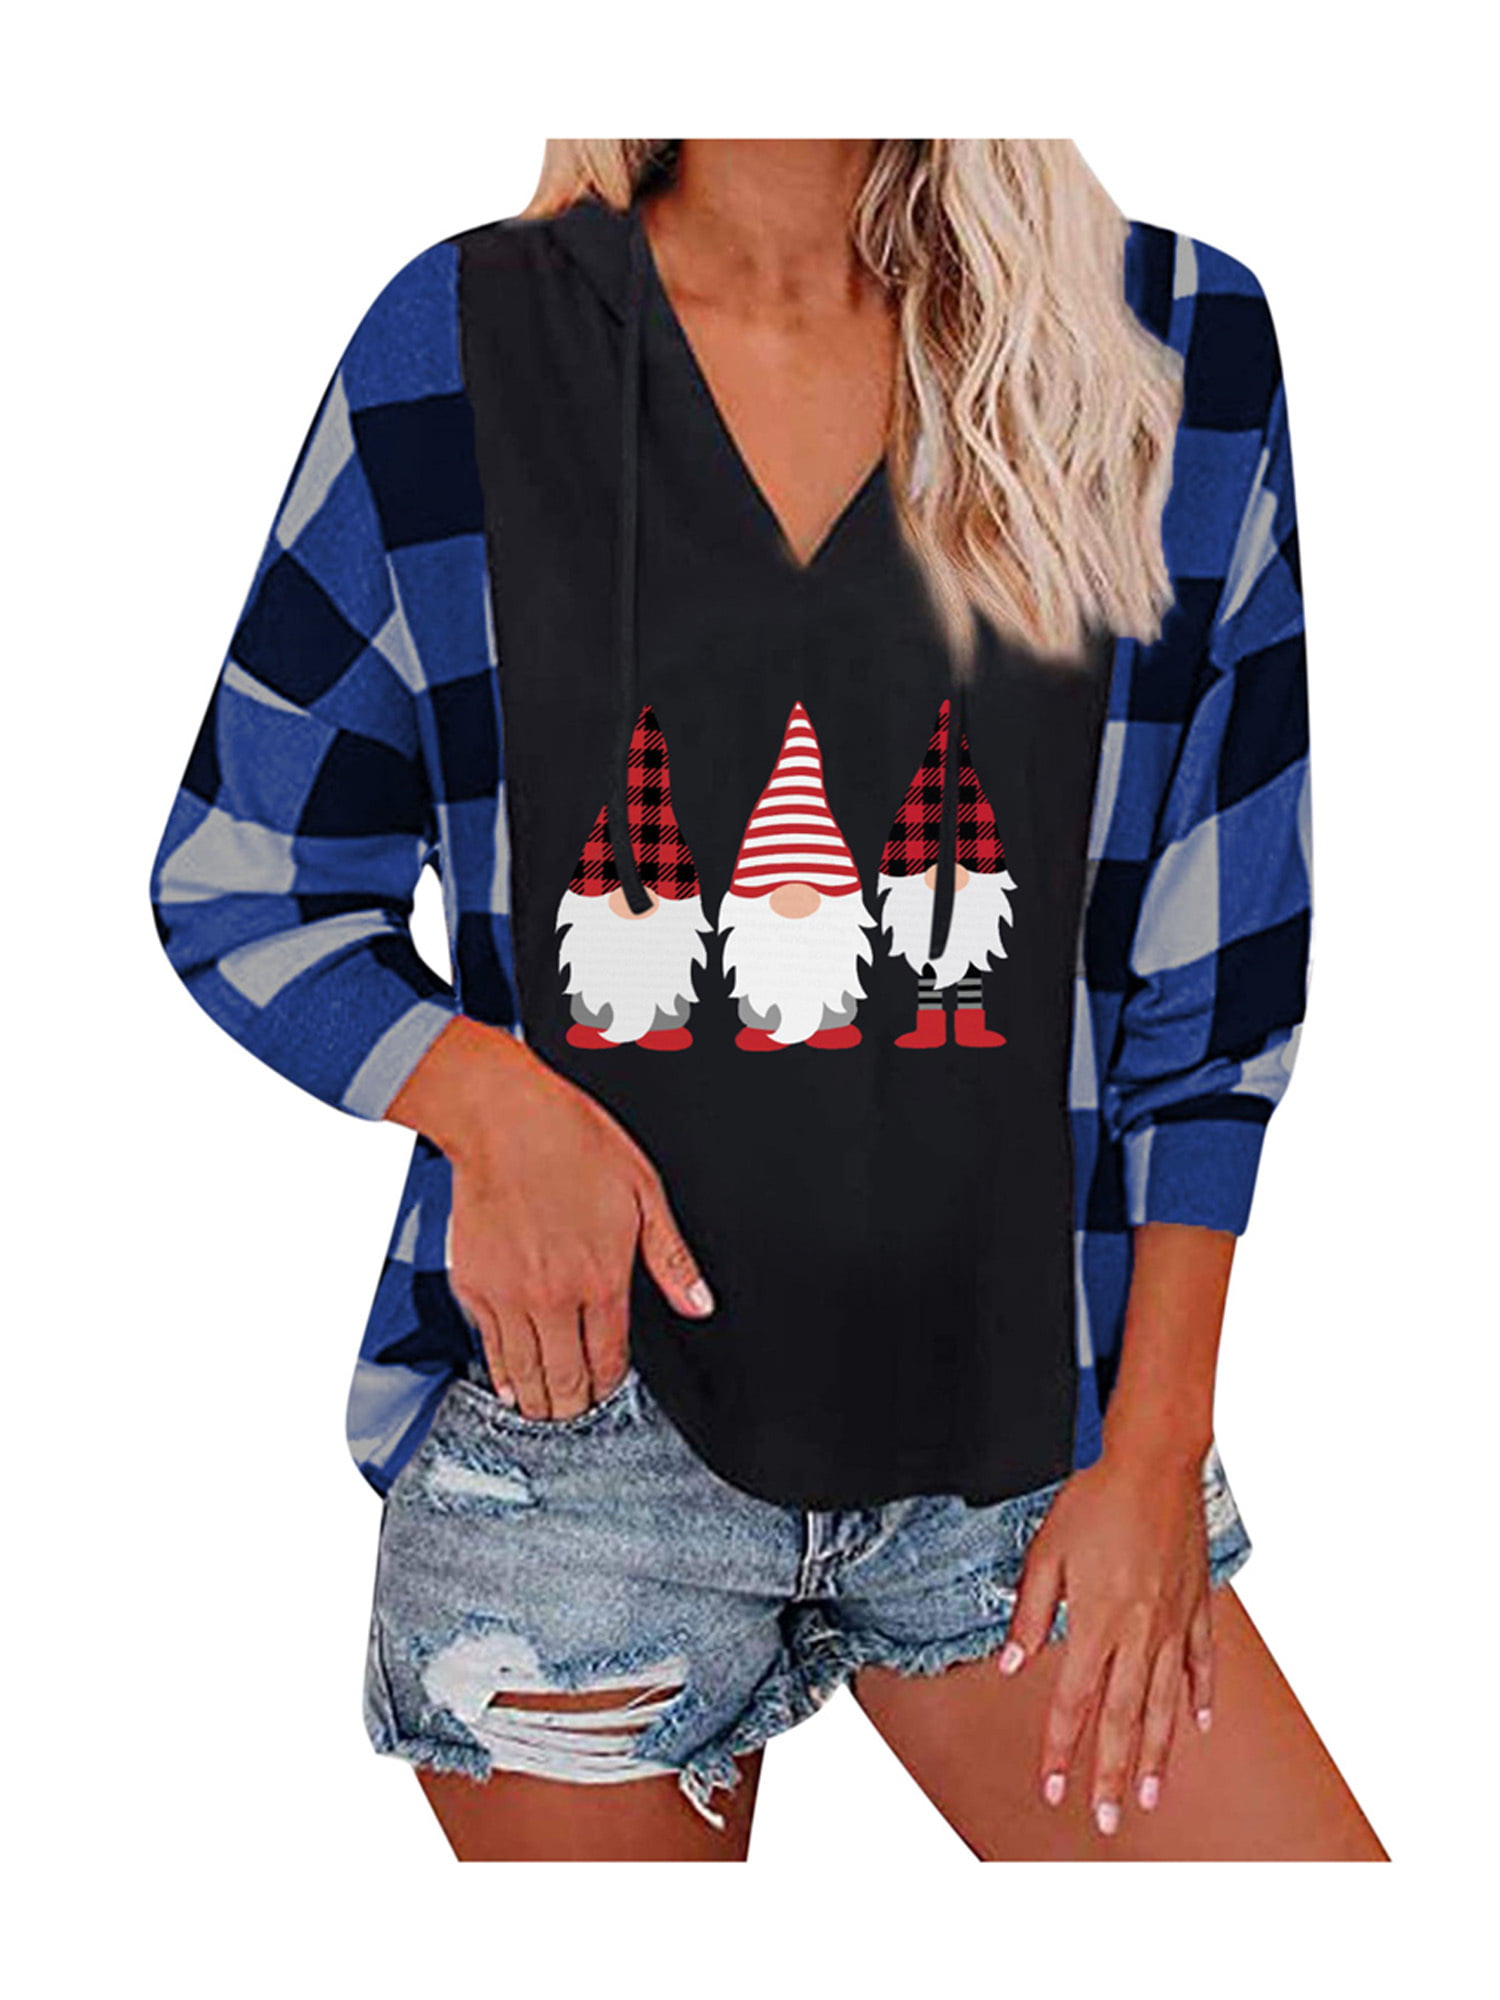 Christmas Womens Hoodie Long Sleeve Casual Sweatshirts Xmas Plaid Printed Pullover Fashion Hooded Tops with Pockets